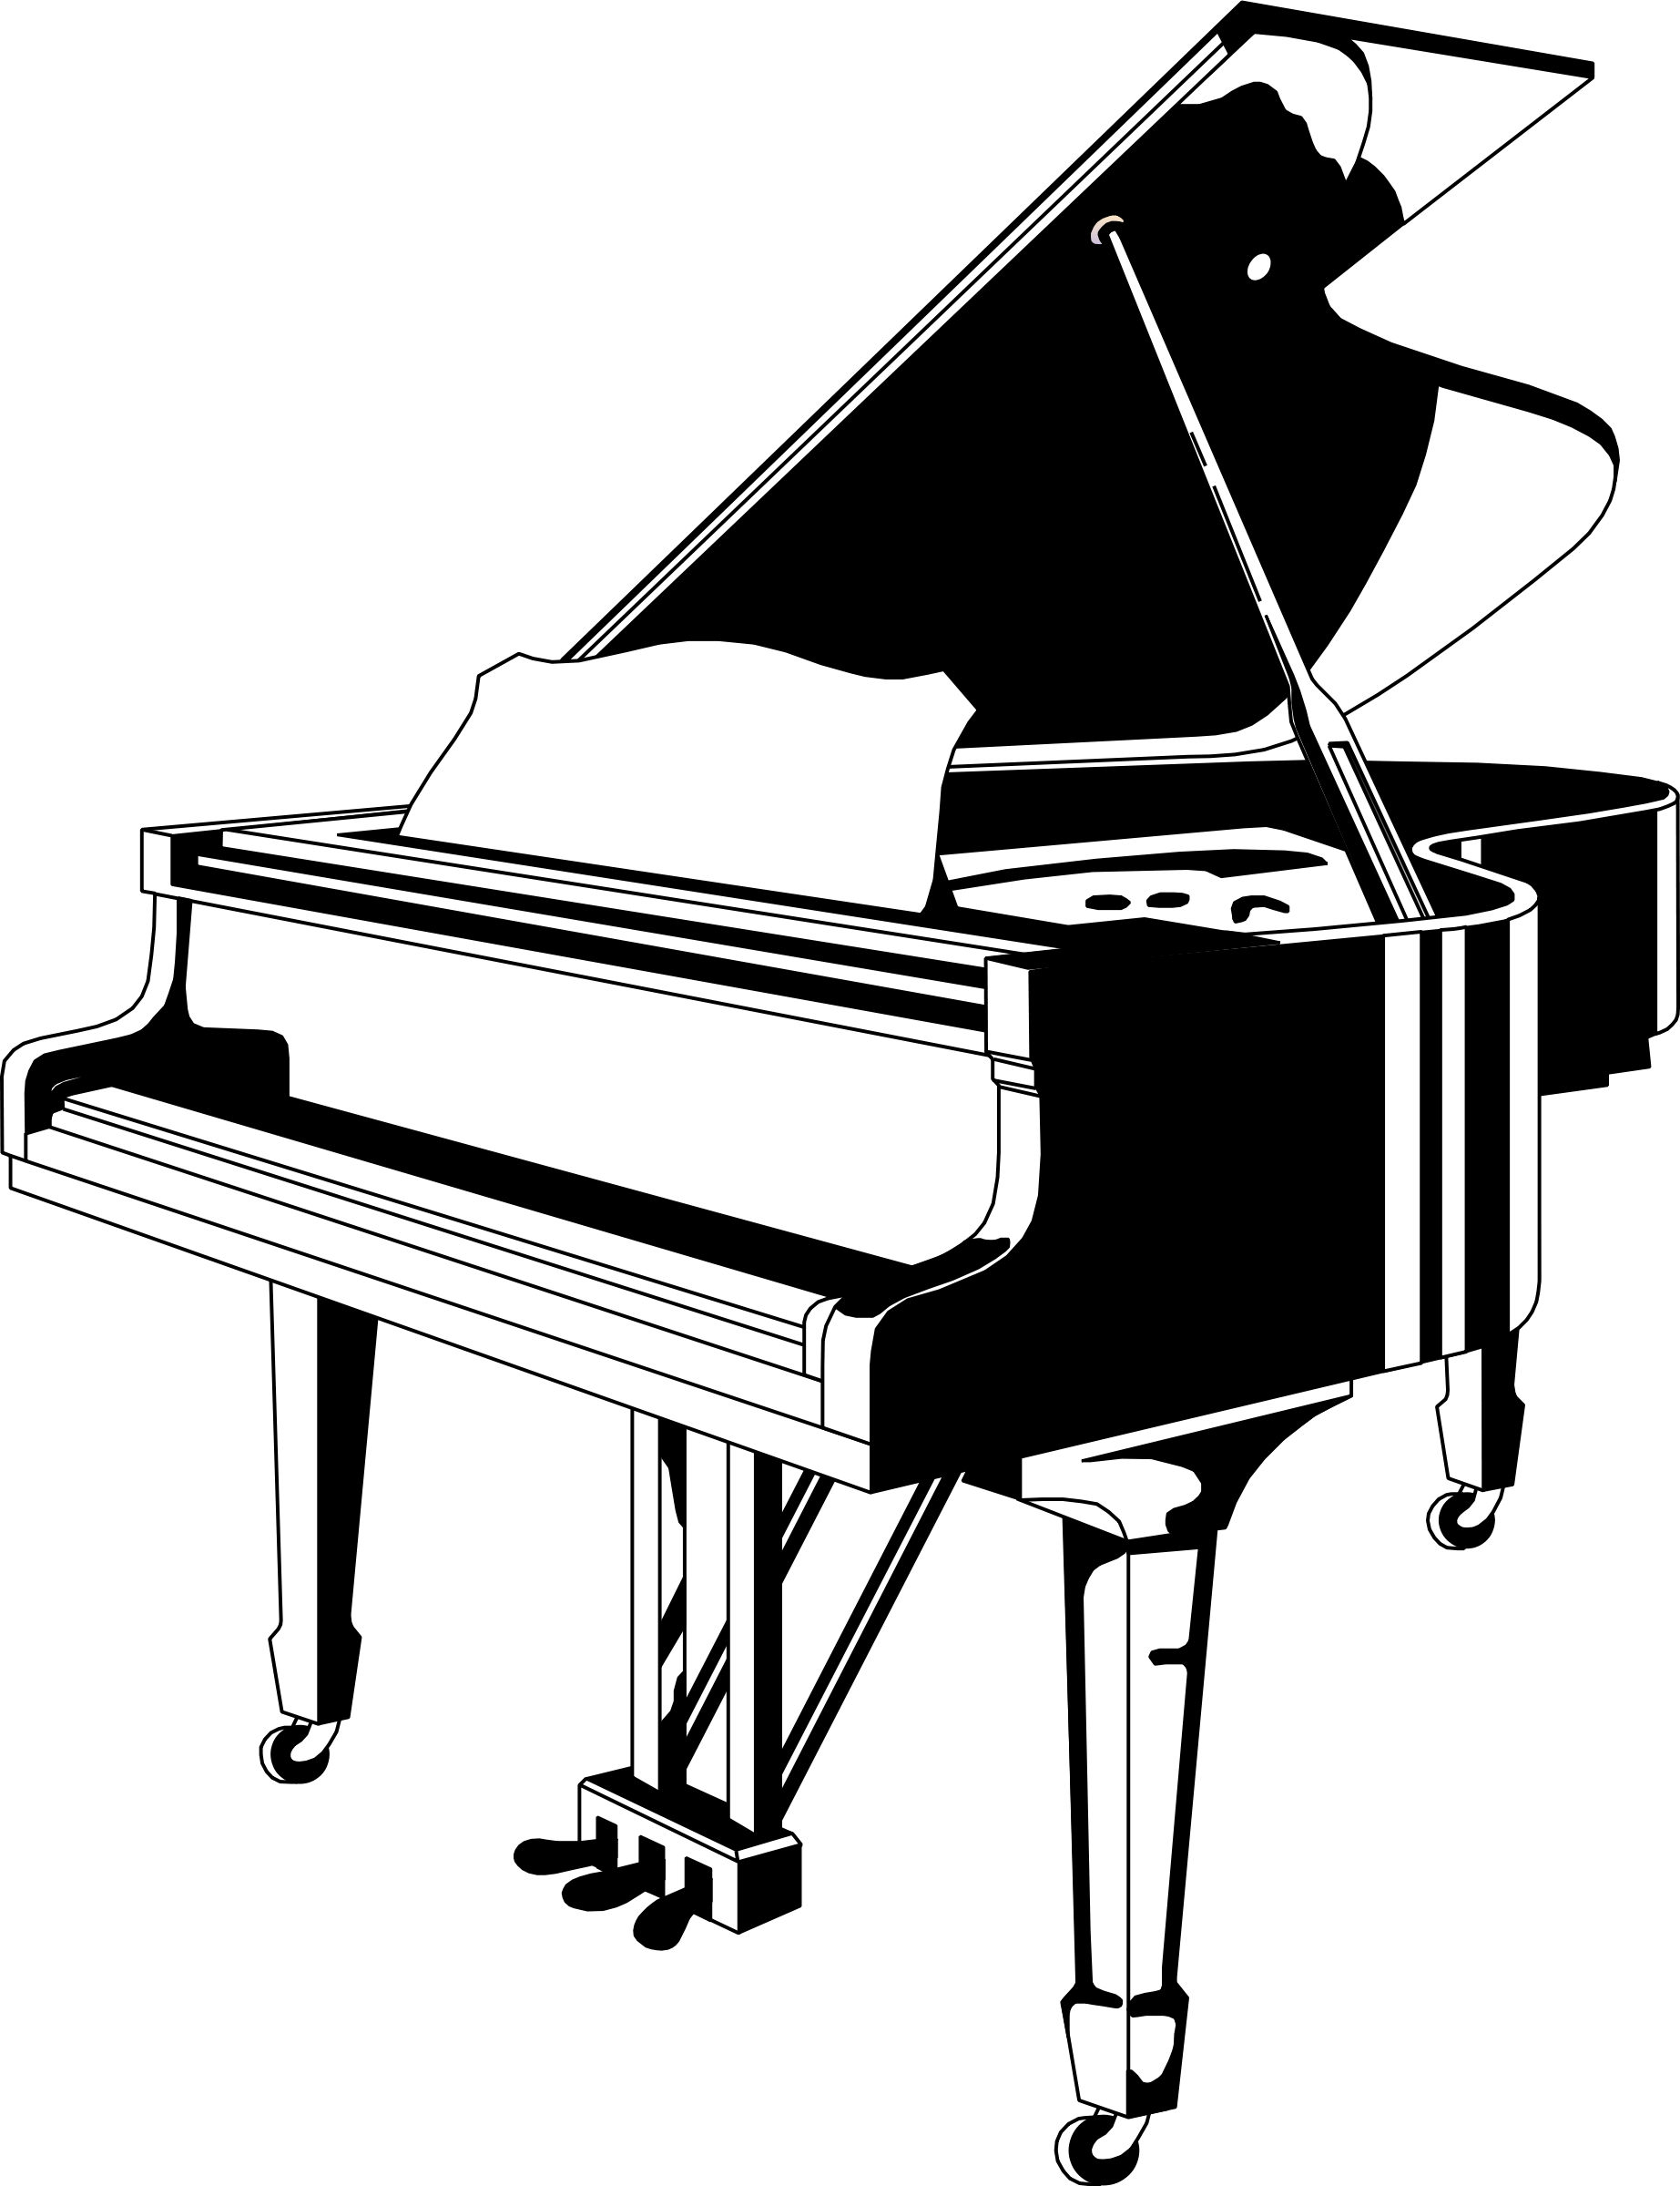 Piano images clip art